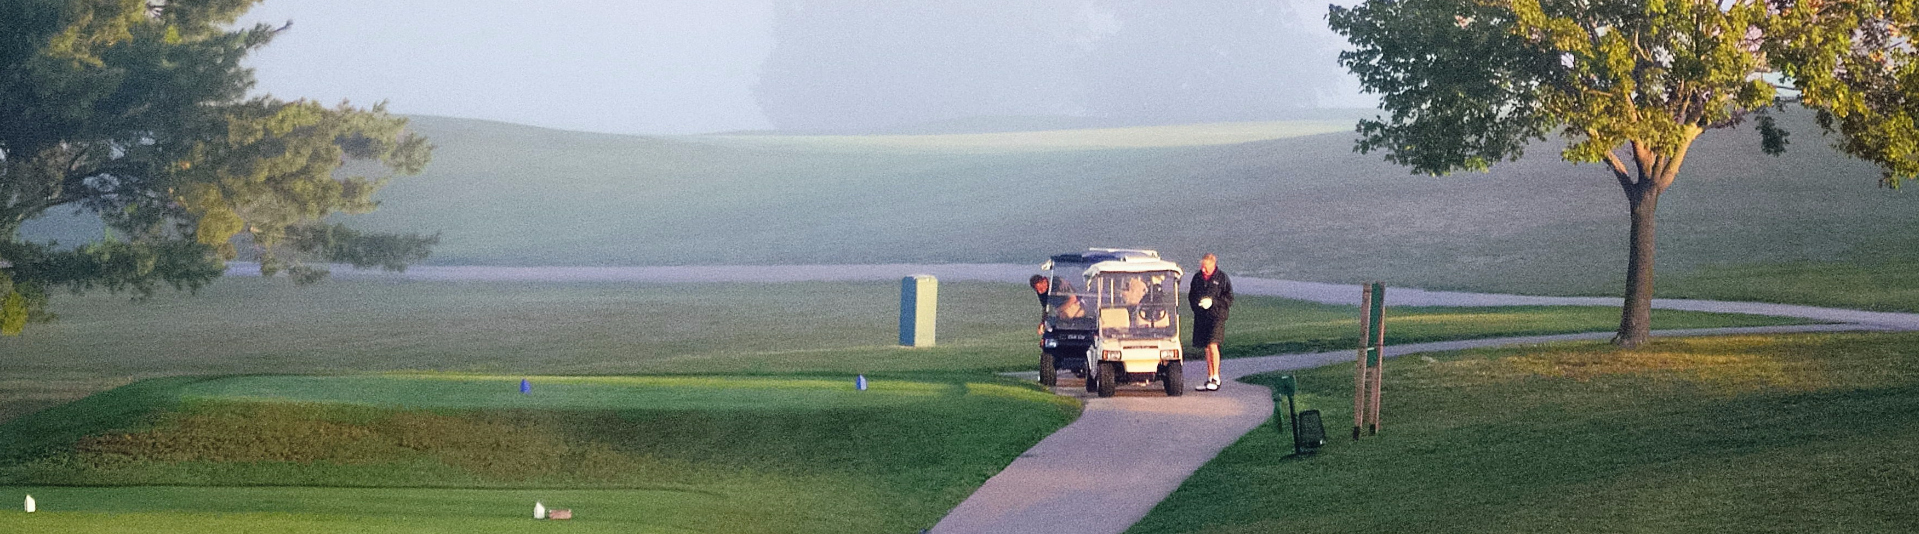 Golfers on cart on foggy course